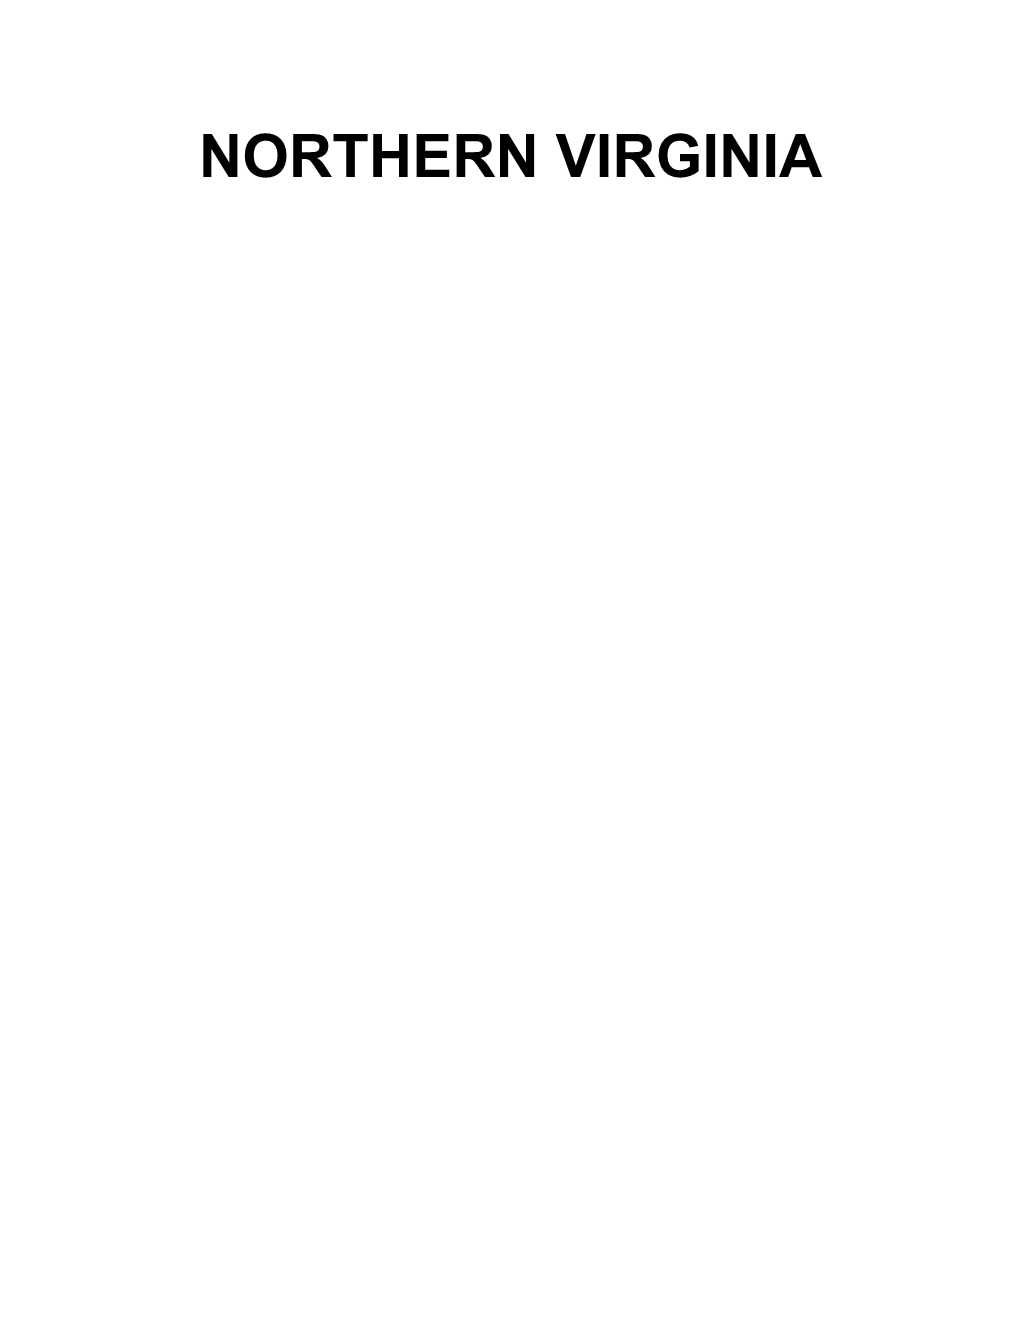 Northern Virginia